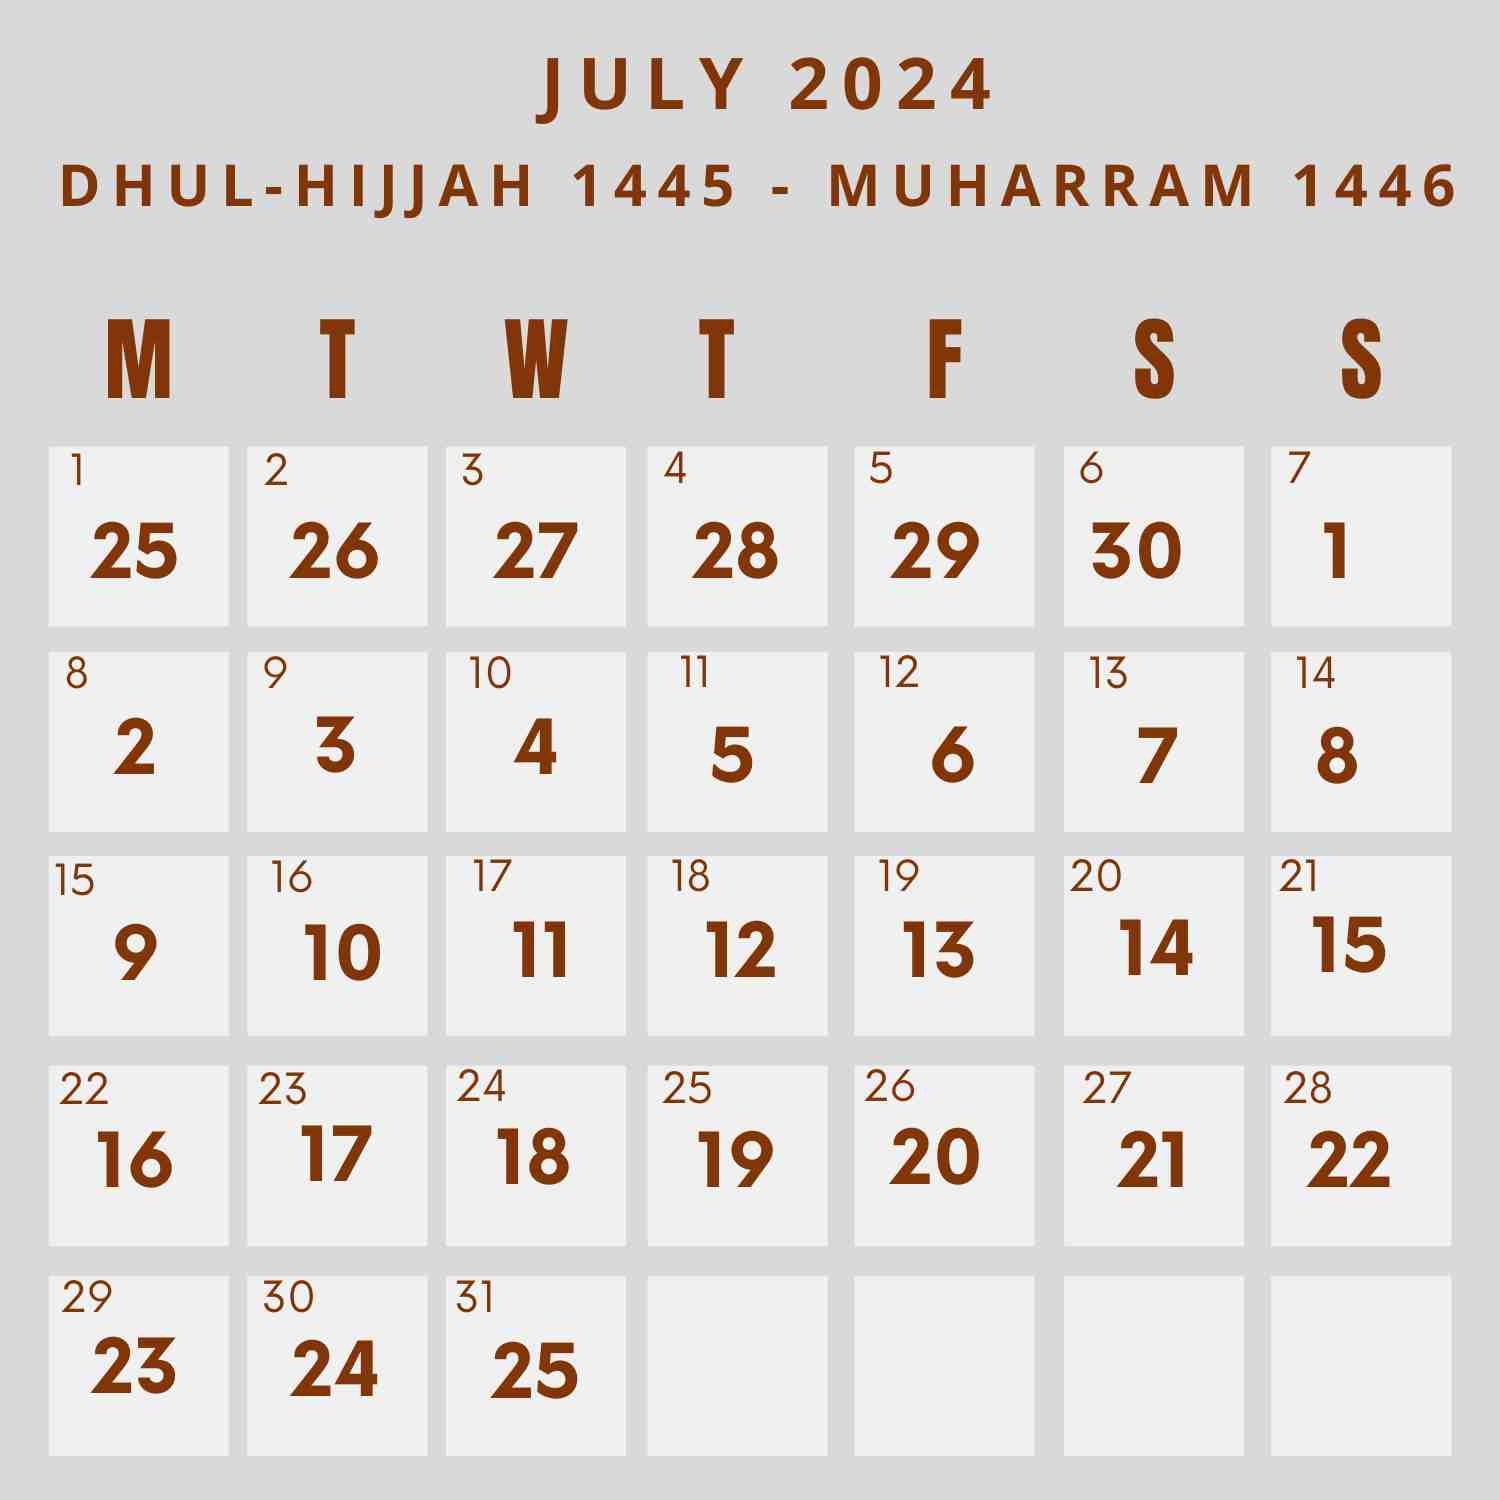 Islamic Calendar 2024 - Khwajadarbar in 12 July 2024 in Islamic Calendar